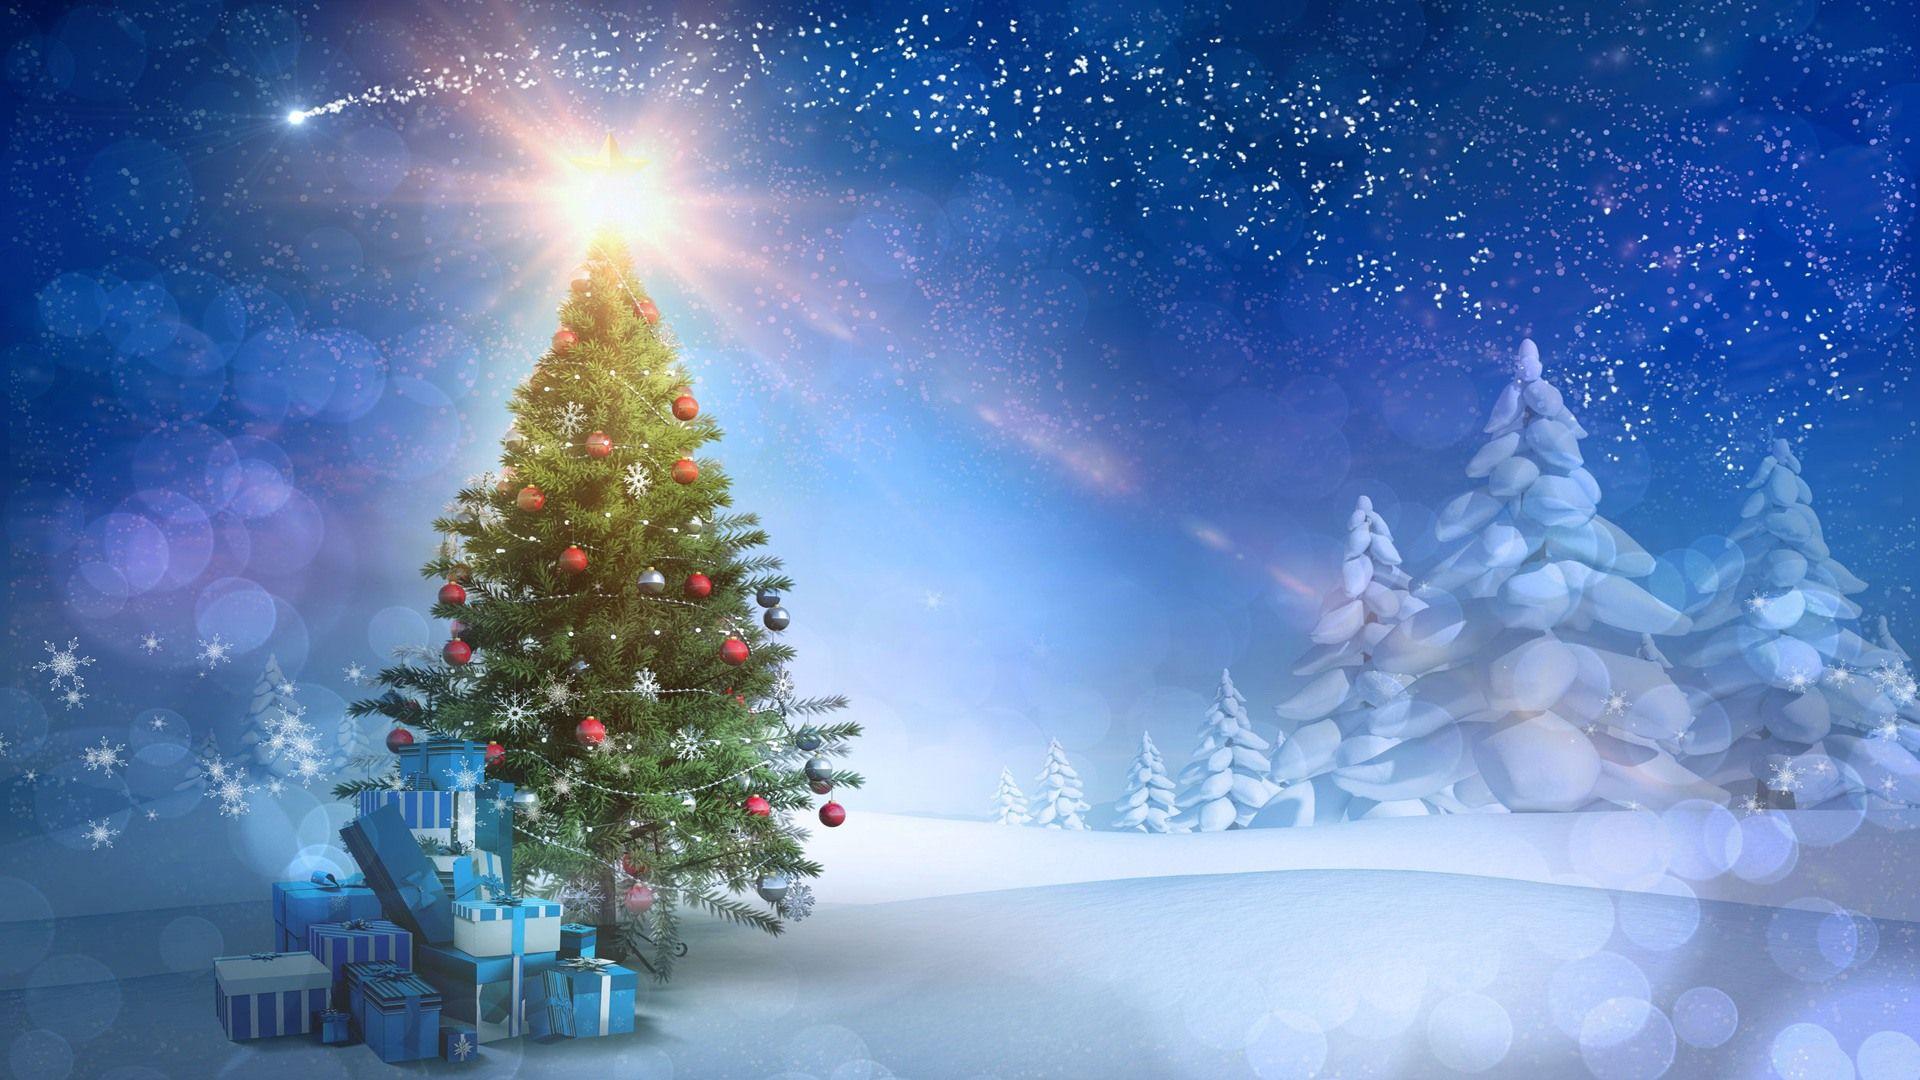 Christmas tree HD wallpaper download